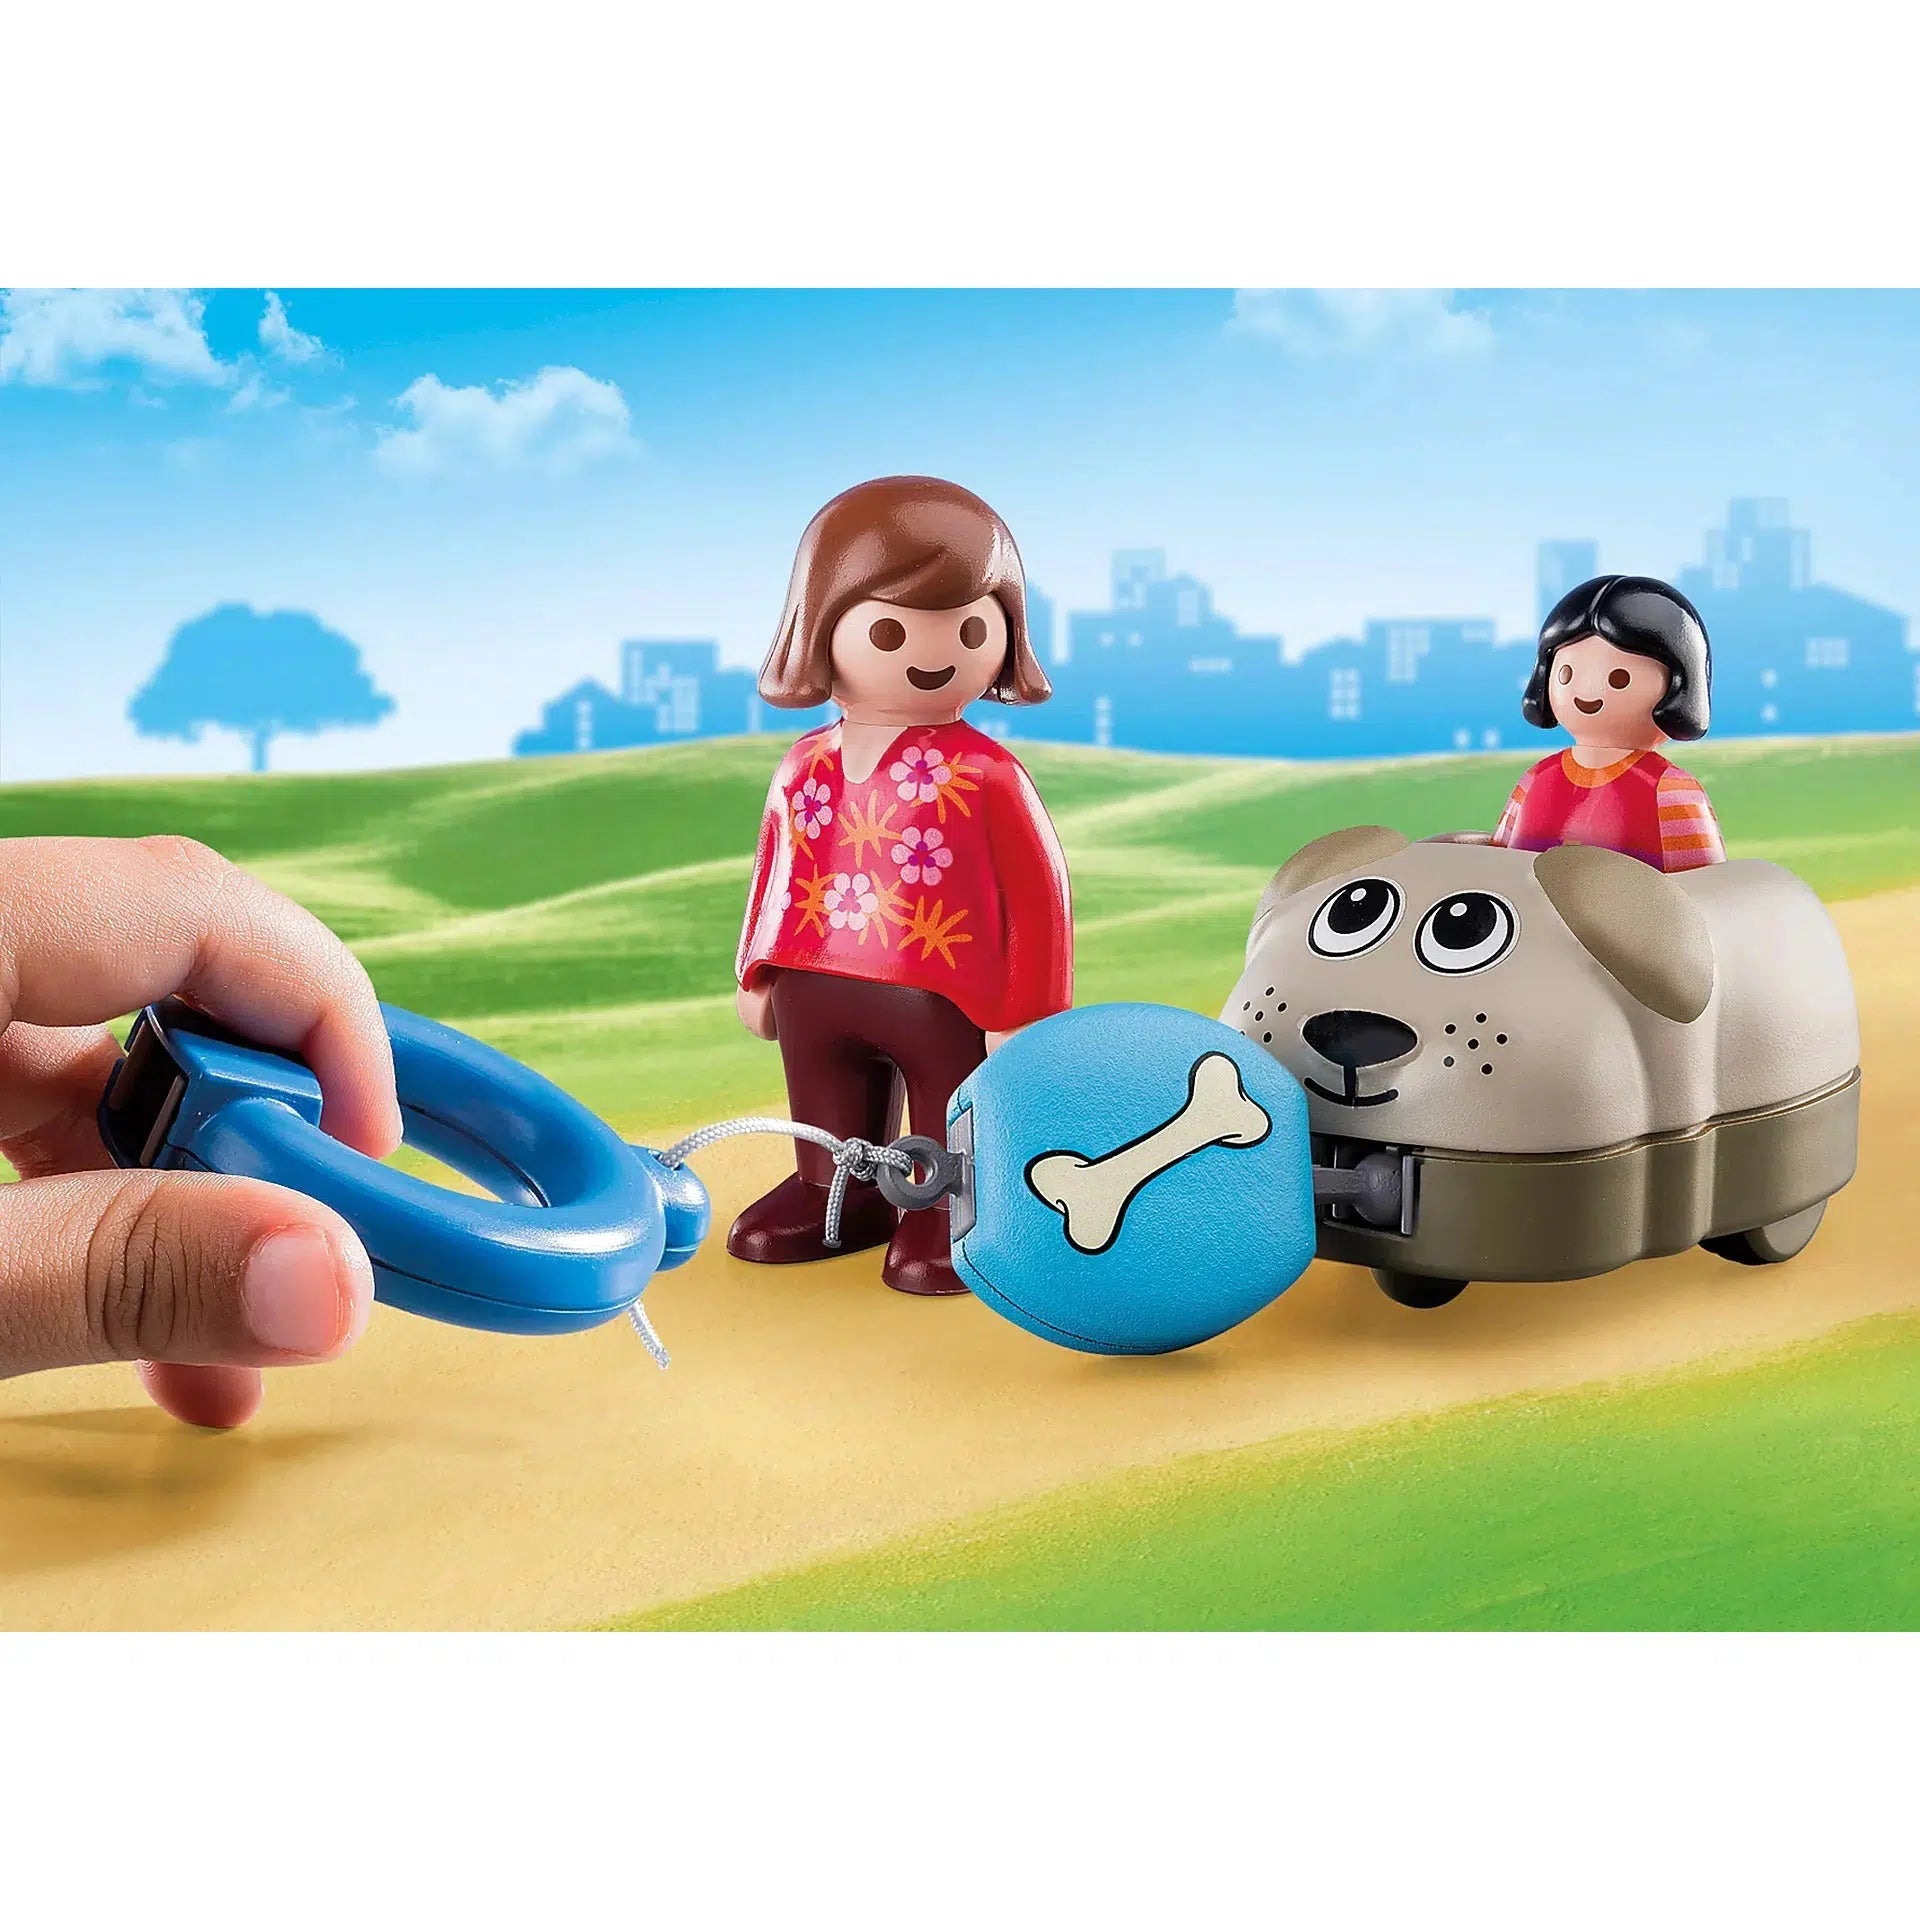 Playmobil-1.2.3. Dog with Train Car-70406-Legacy Toys